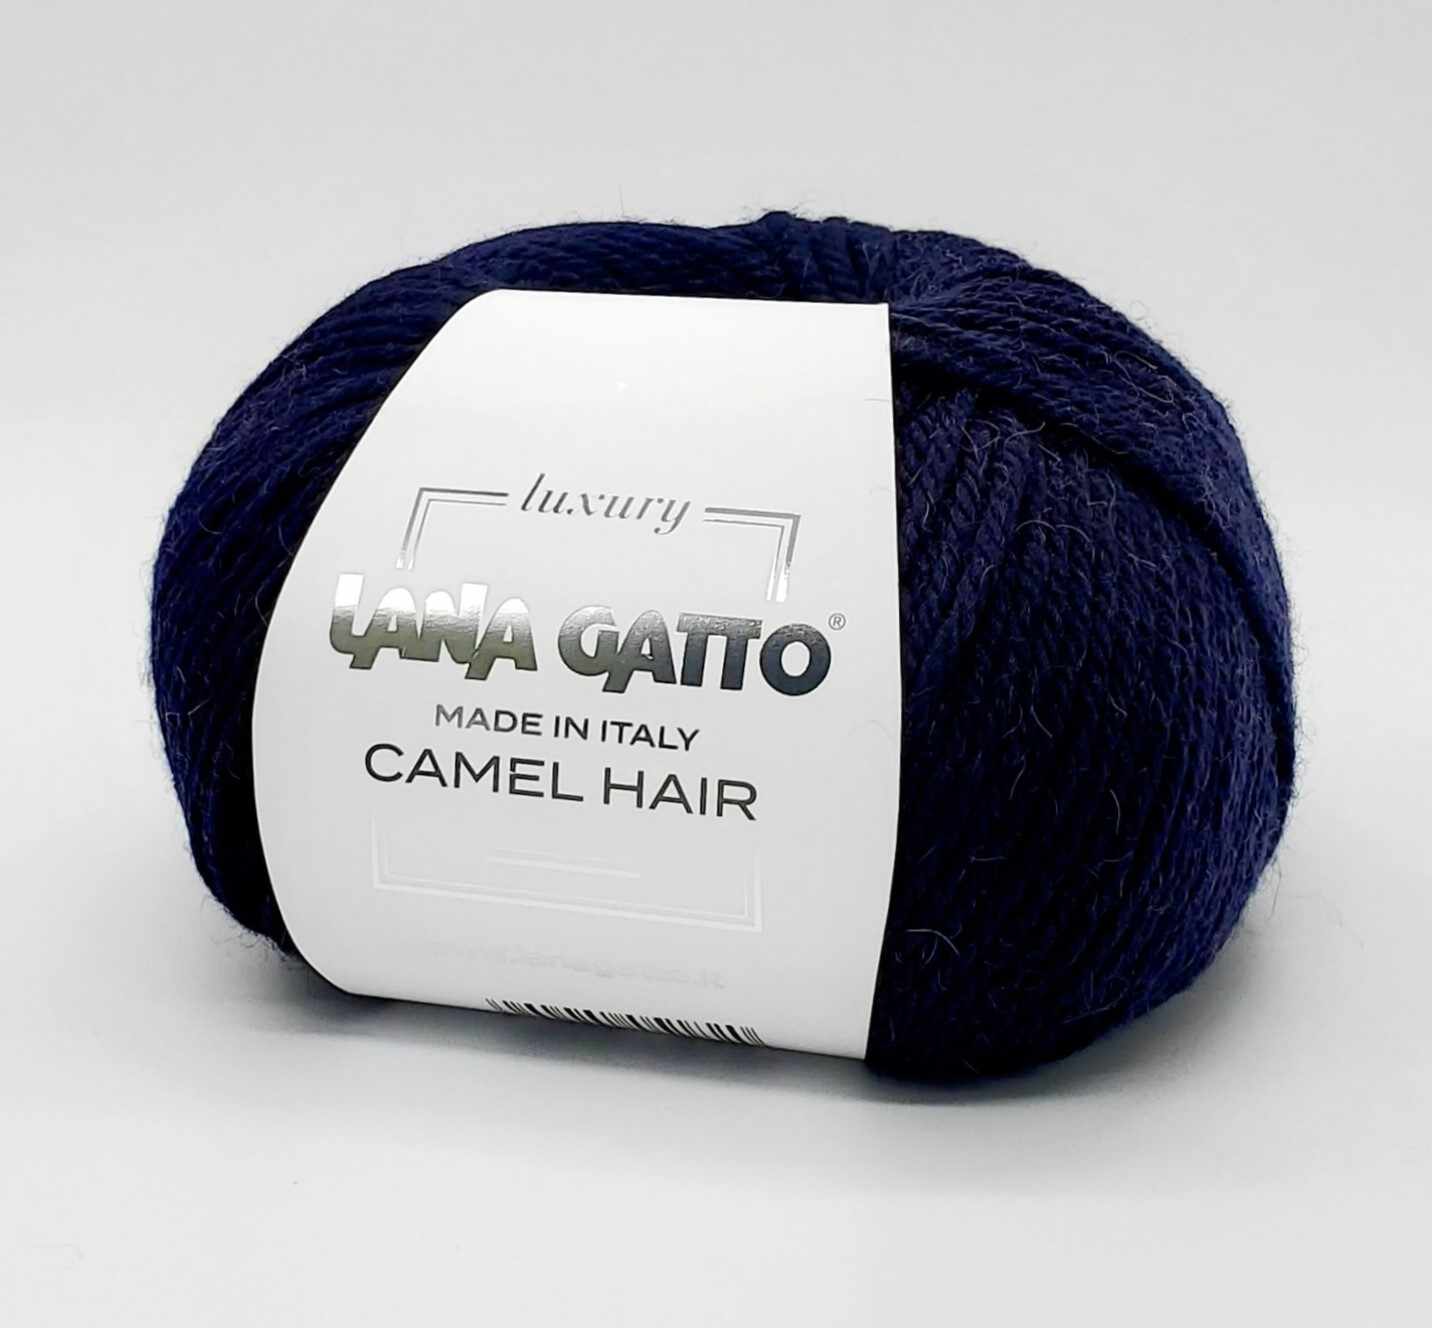 Příze Lana Gatto Camel Hair tmavá modrá